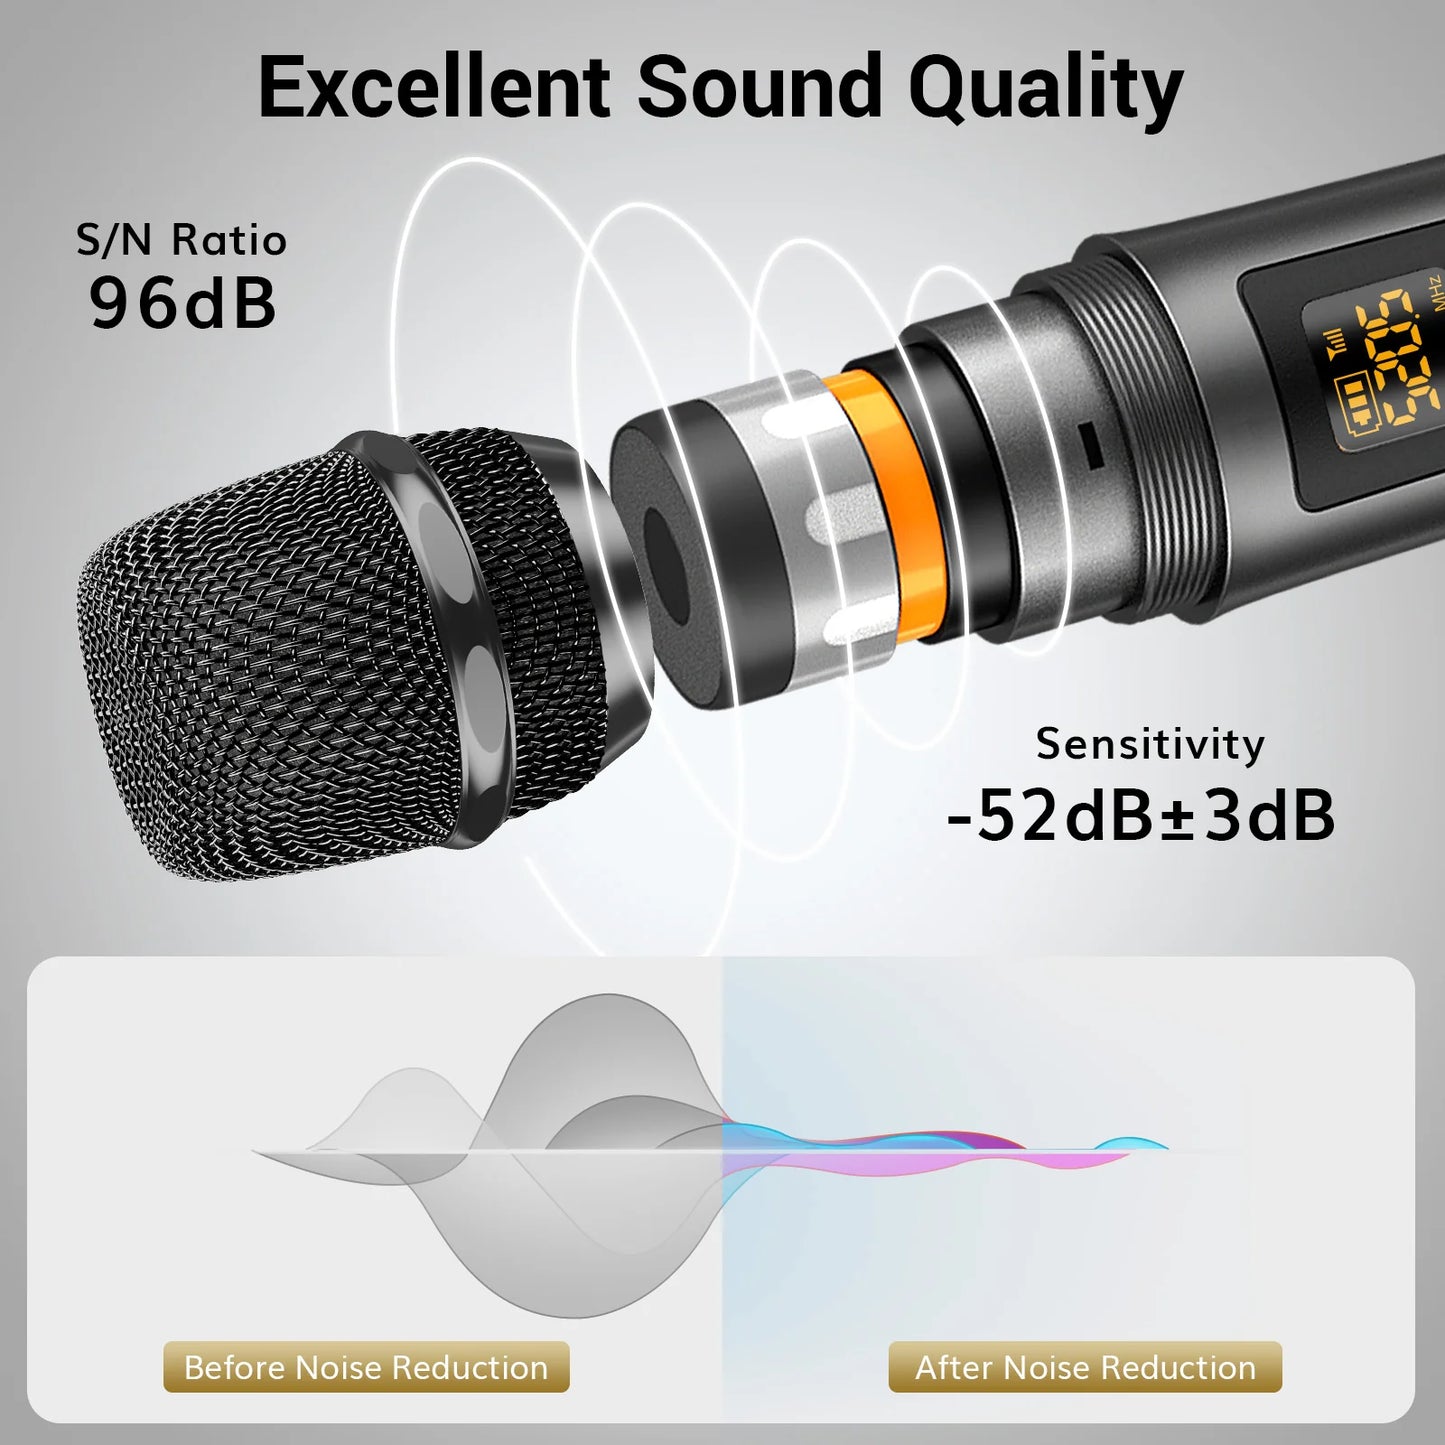 TONOR TW515 wireless microphone (with treble/bass/echo)